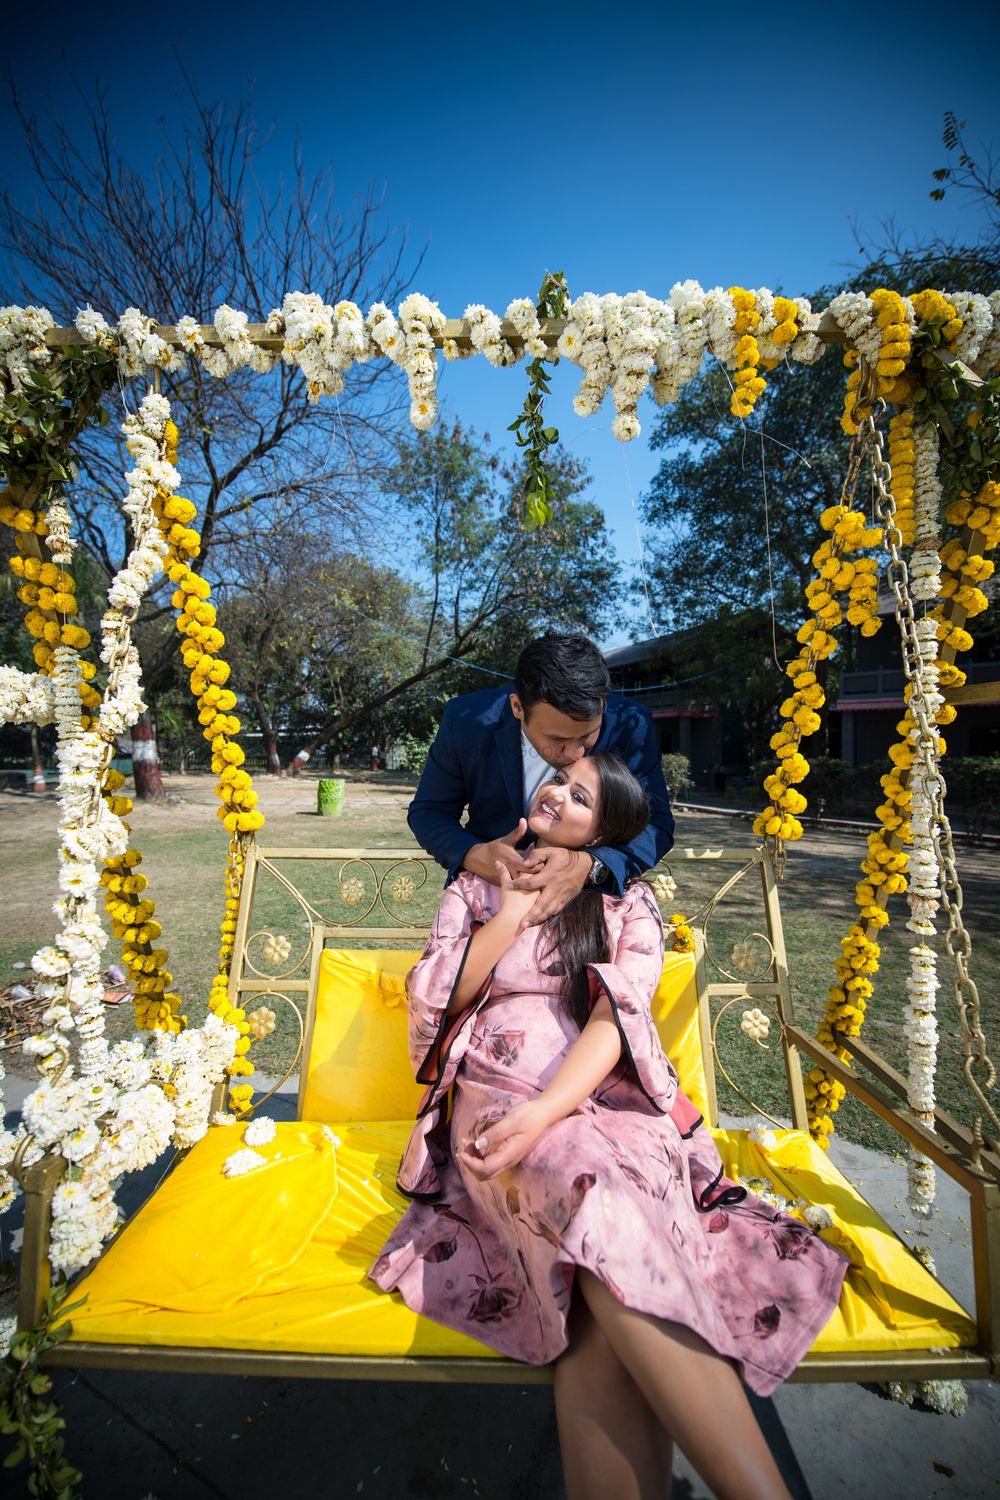 Photo From PRE WEDDING - By Tasvir Photos & Films